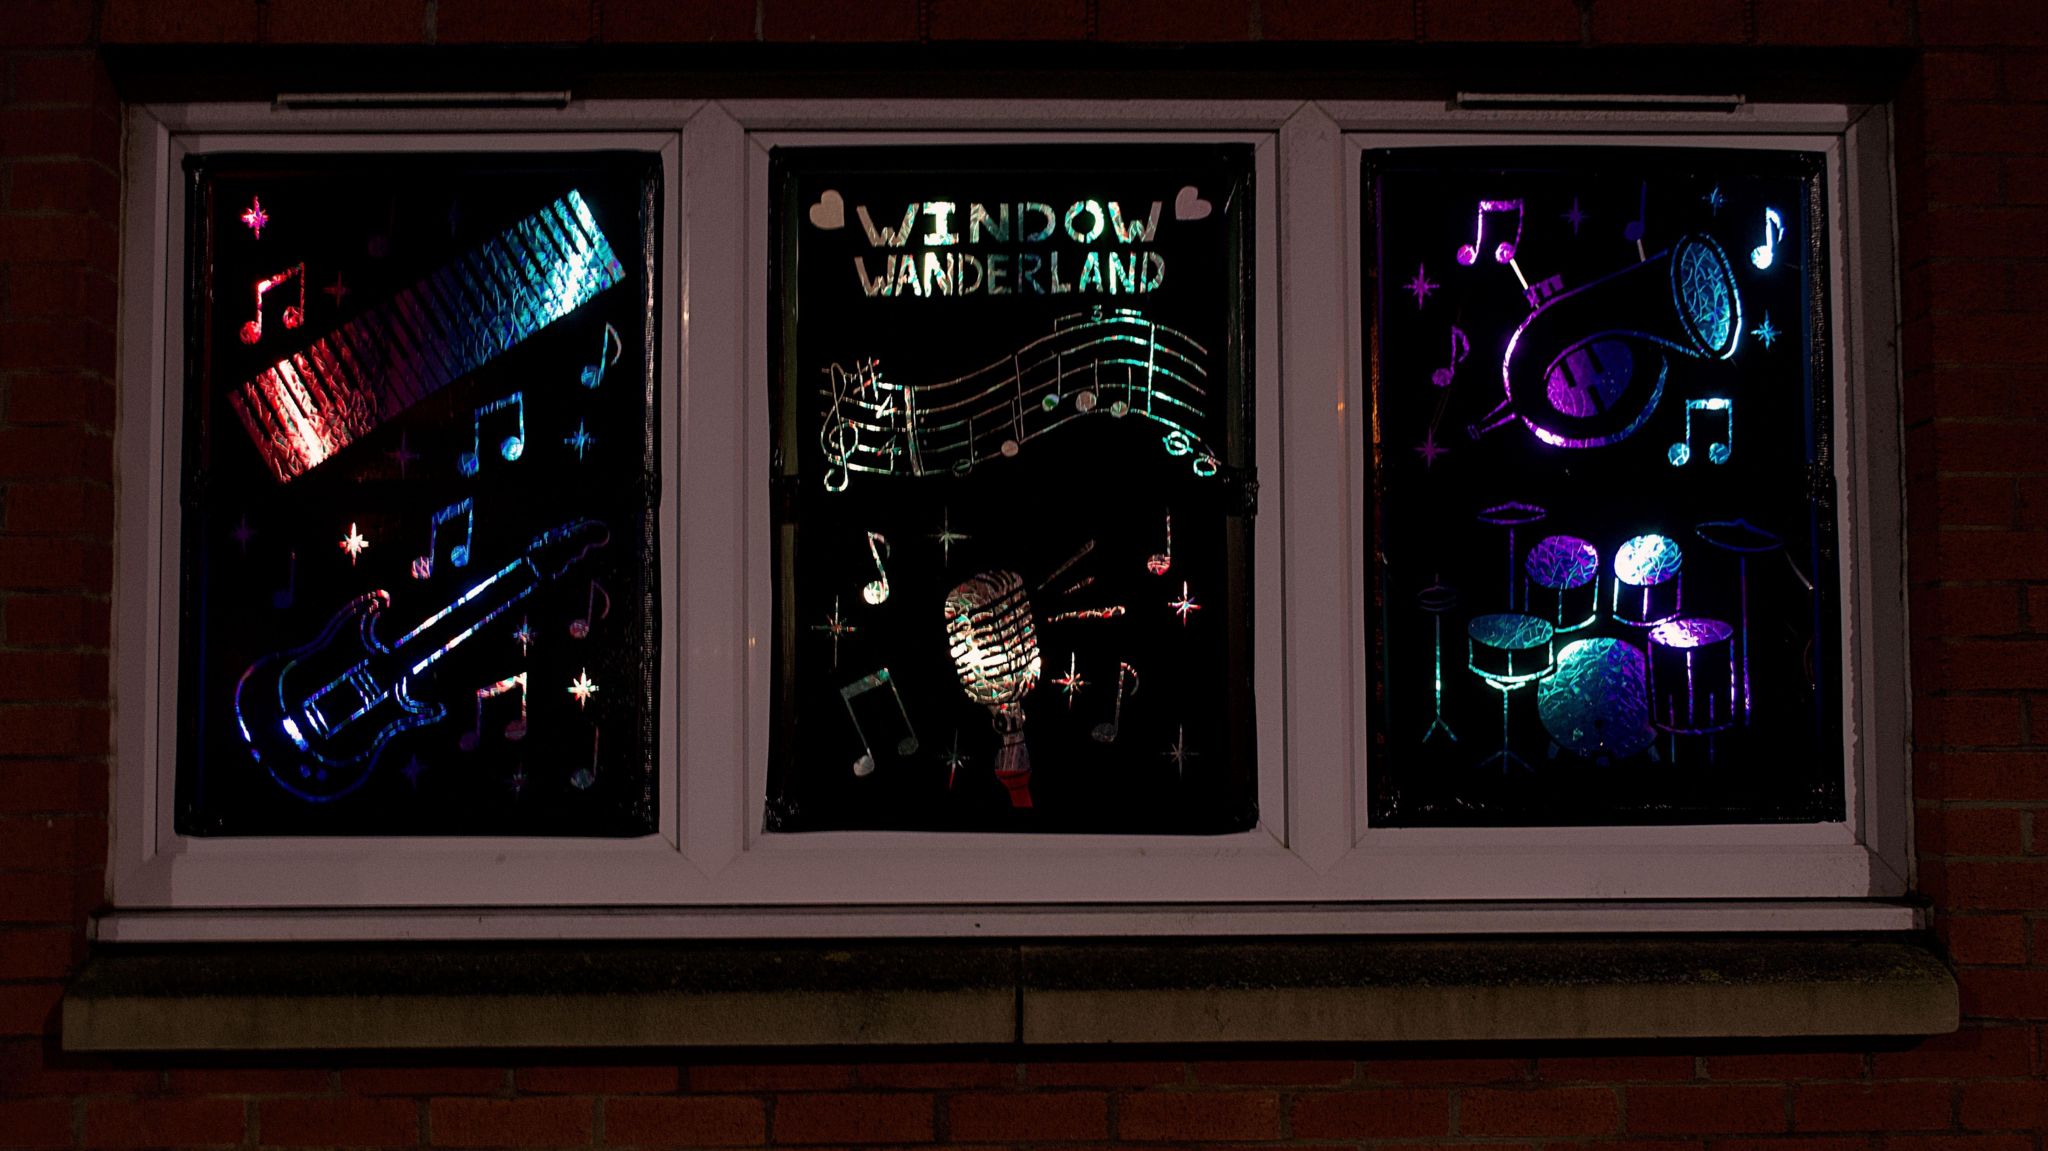 Glittering musical instruments light up three windows alongside a 'Window Wonderland' tag